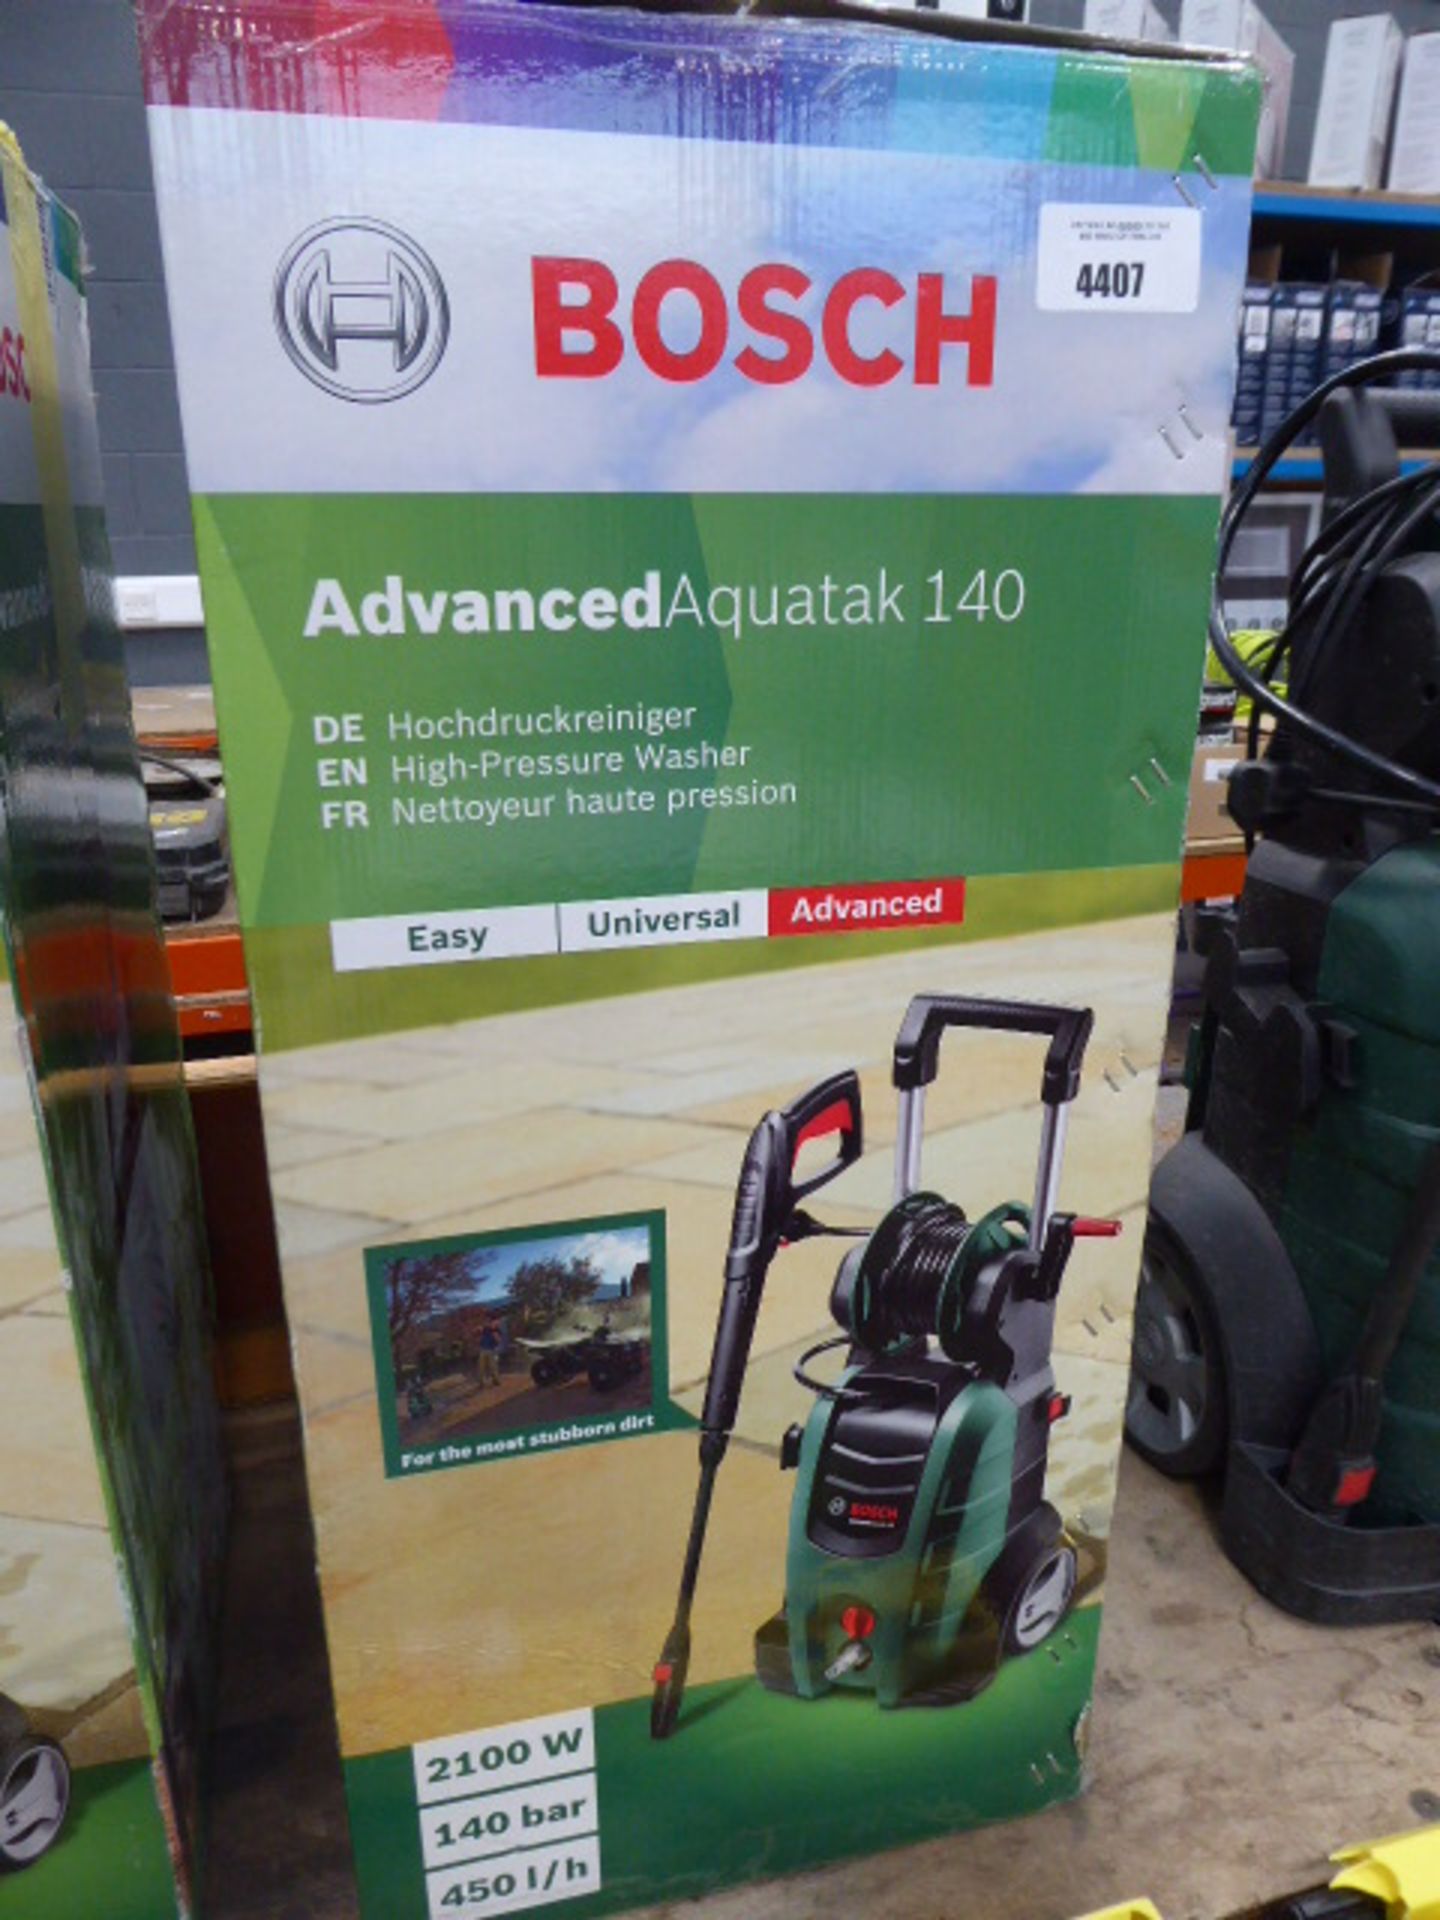 Boxed Bosch Advance Aquatech 140 pressure washer